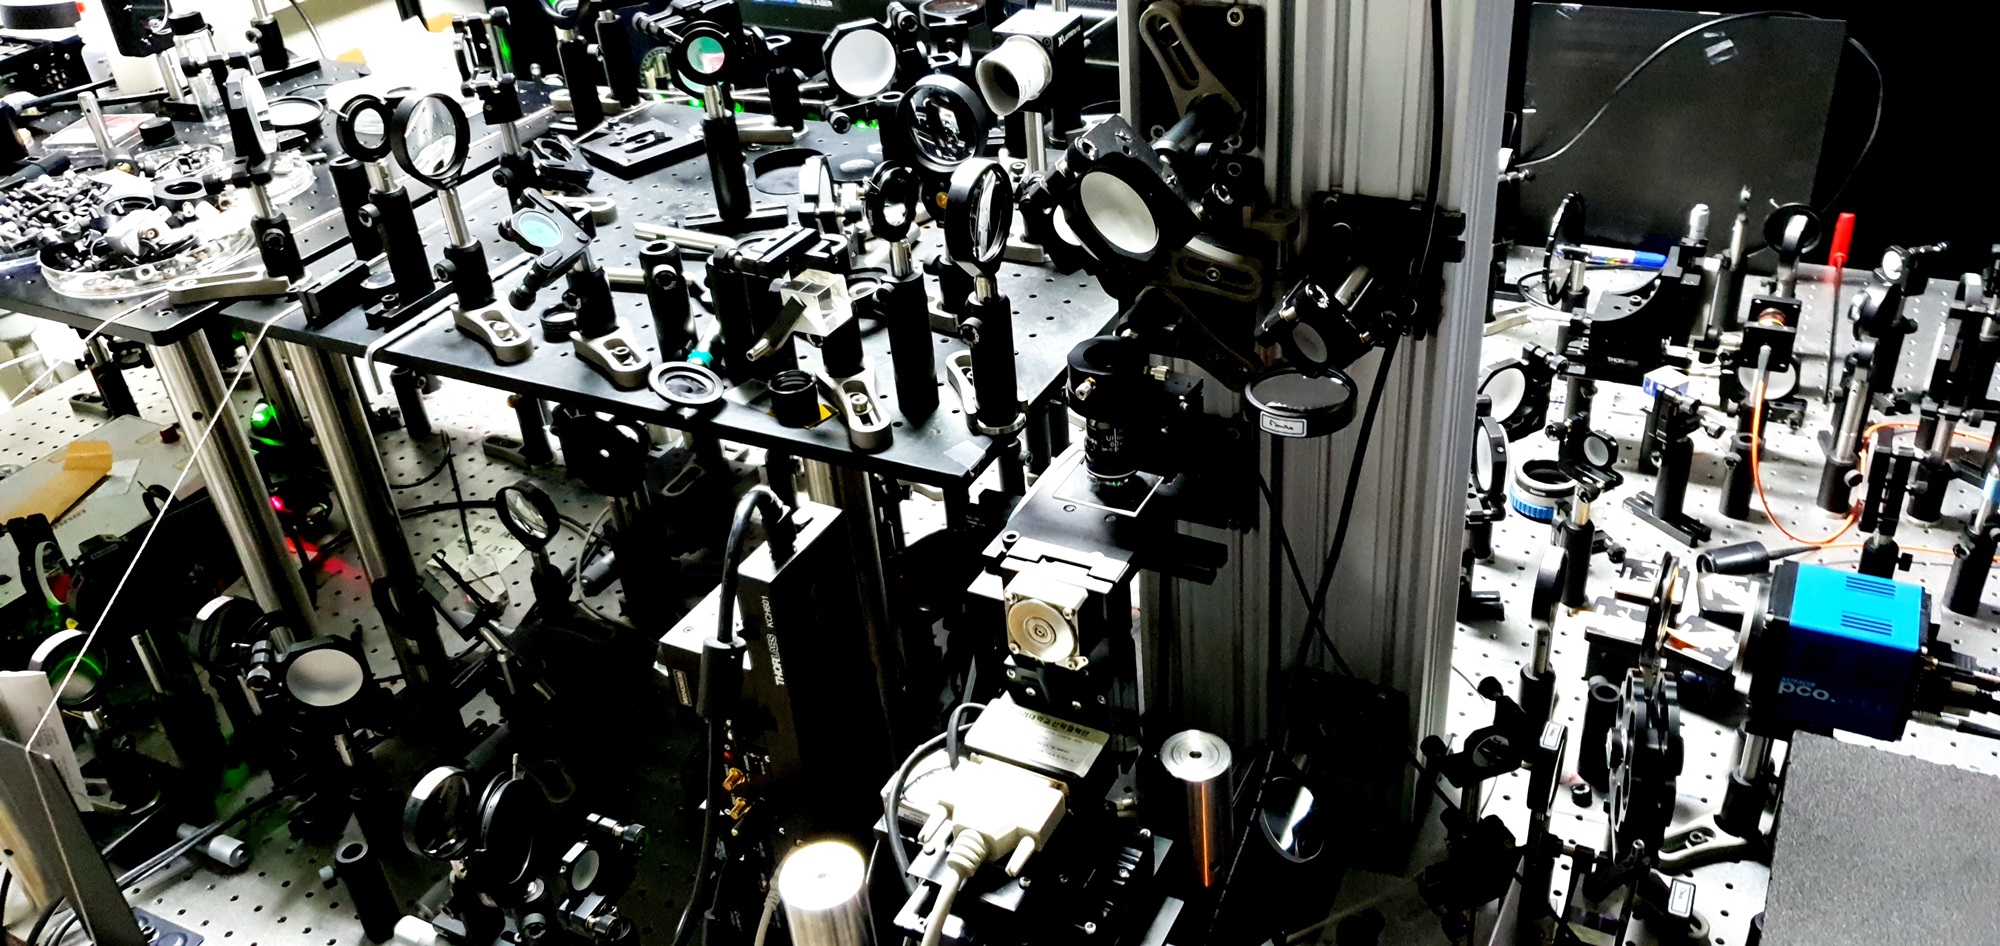 IBS 분자 분광학 및 동력학 연구단 연구진이 개발한 초고속 홀로그램 현미경. 기존보다 영상획득 속도를 수십 배 높여 살아있는 생물체의 신경망까지도 관찰할 수 있다. <사진=IBS 제공>